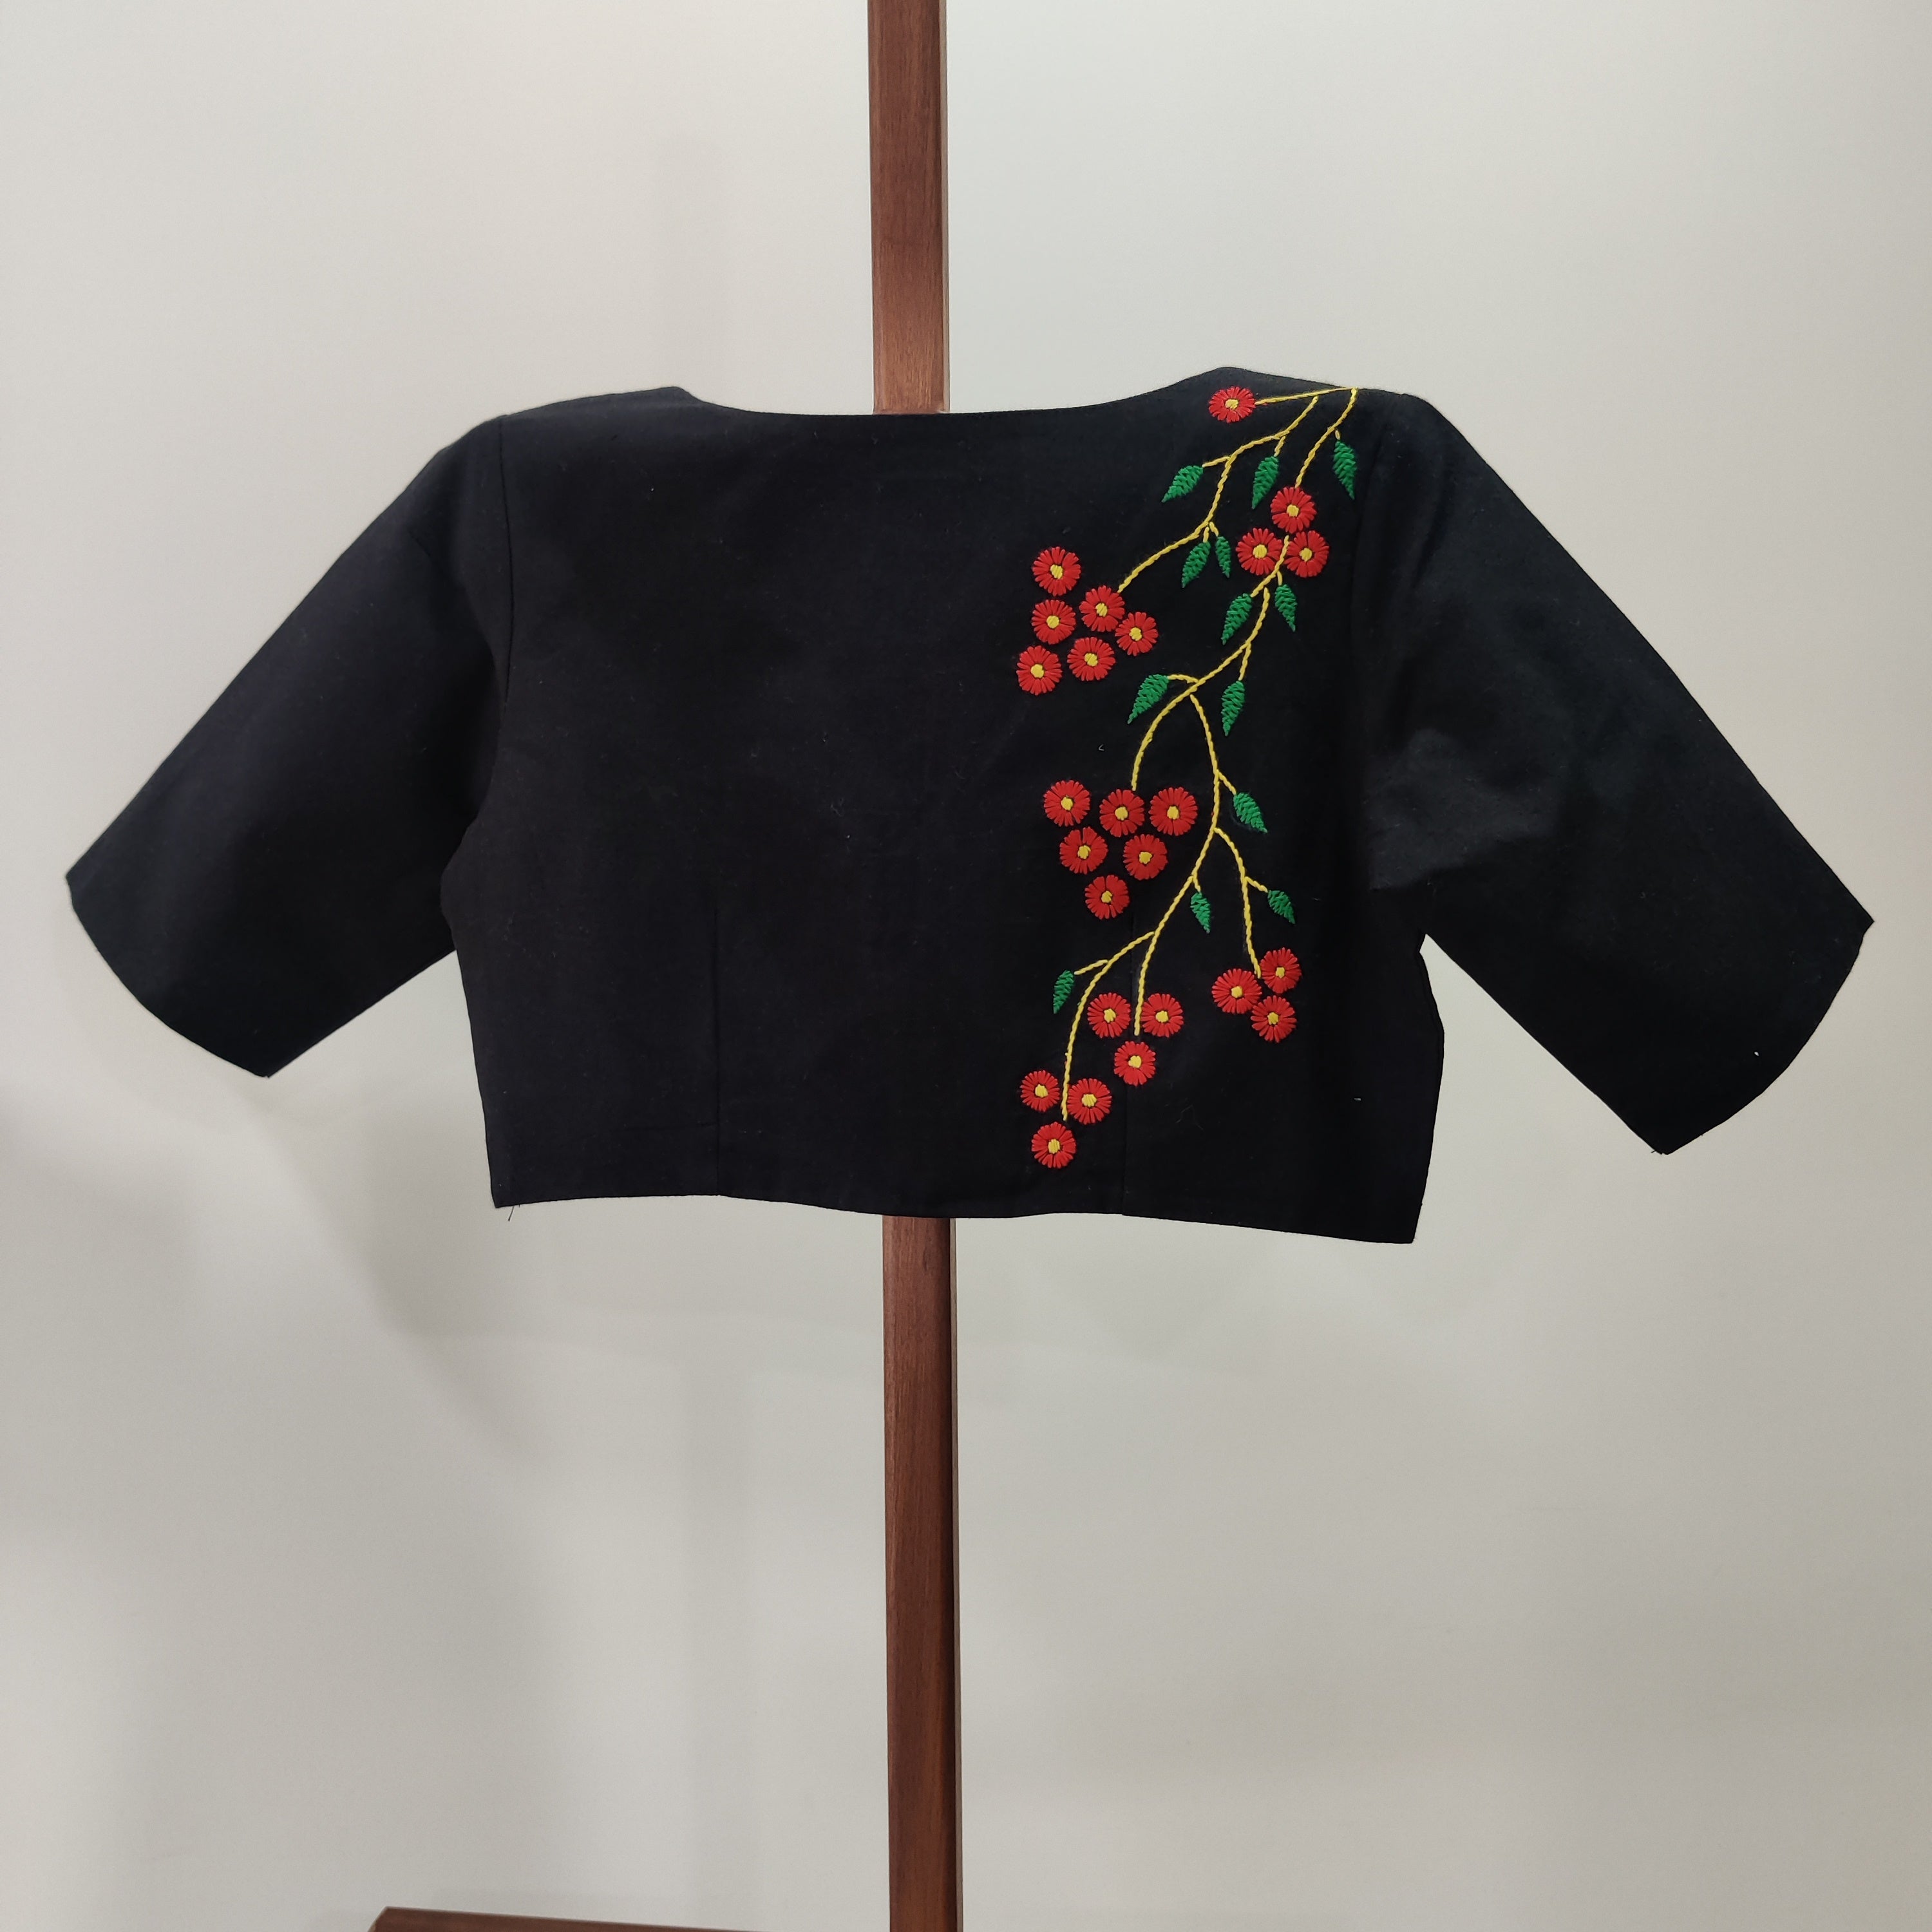 Debashree - Black embroidered blouse